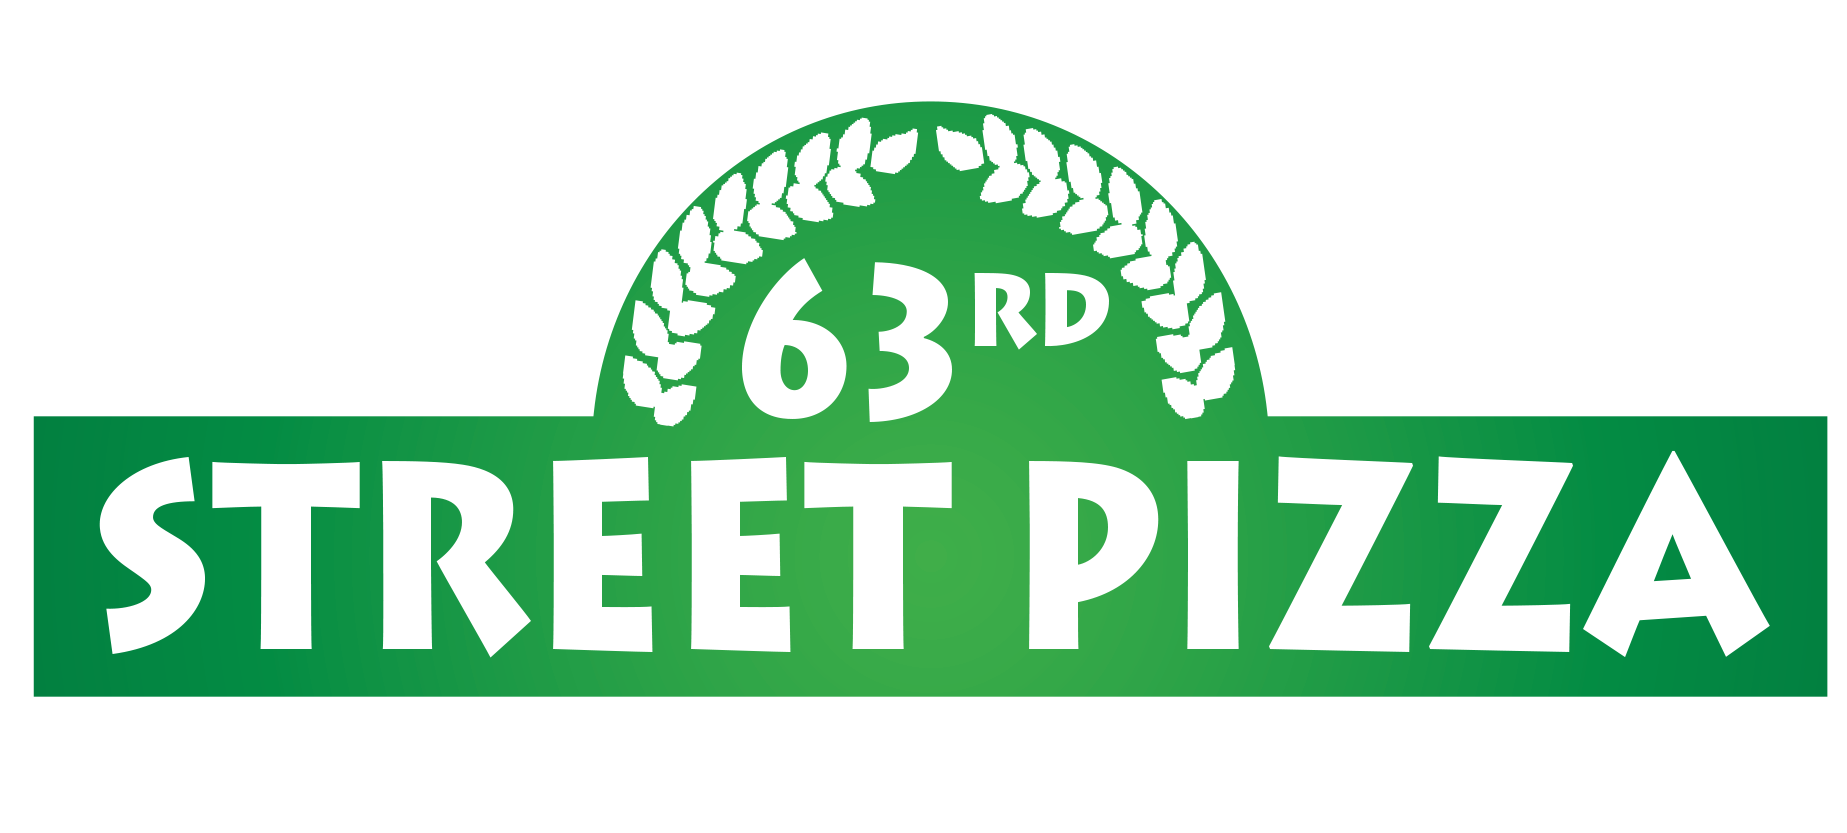 63rd Street Pizza Logo